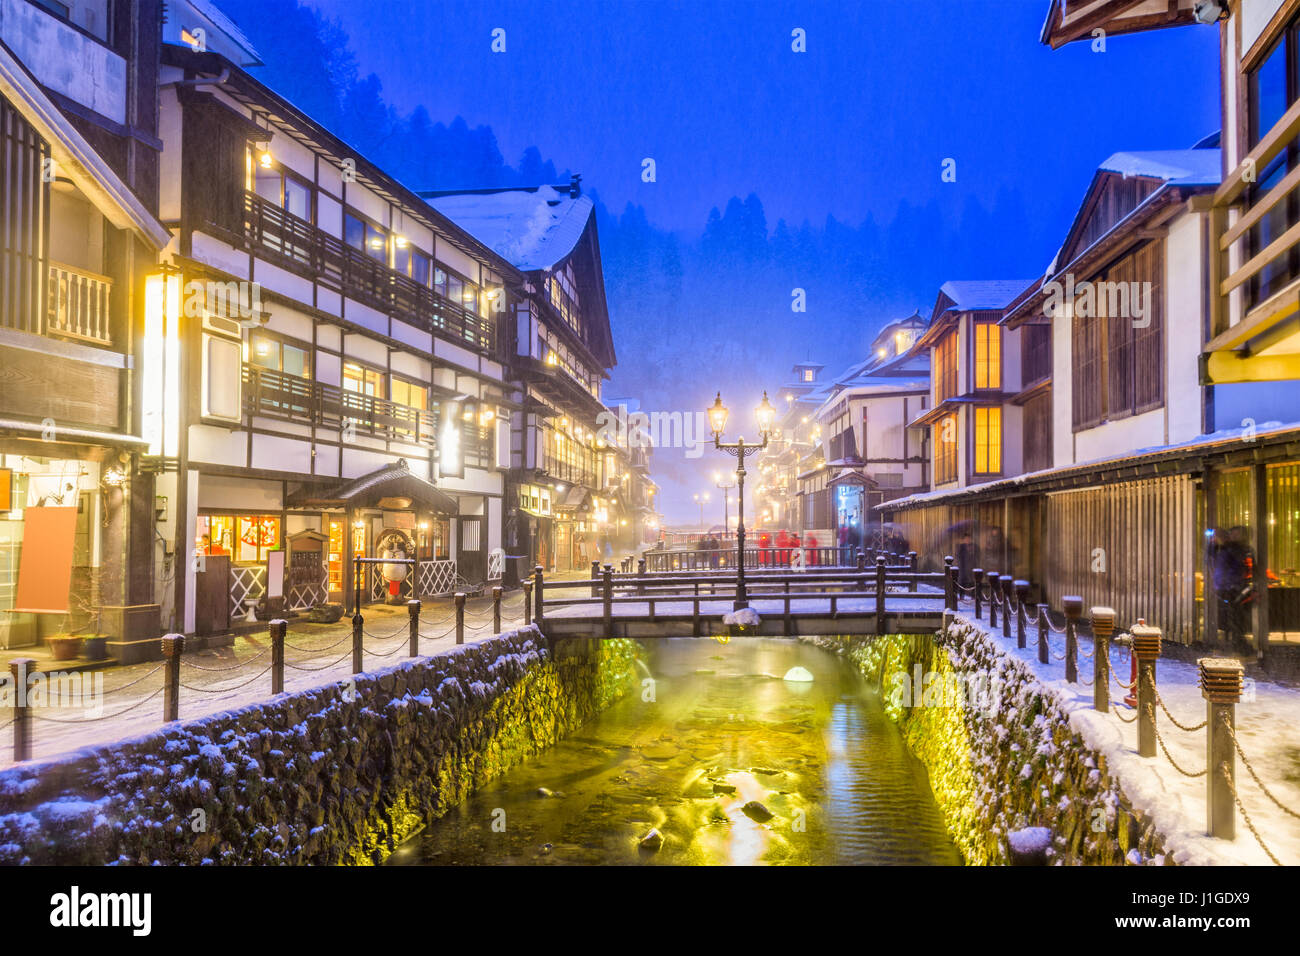 Obanazawa Ginzan Onsen, Japan hot springs town in the snow. Stock Photo